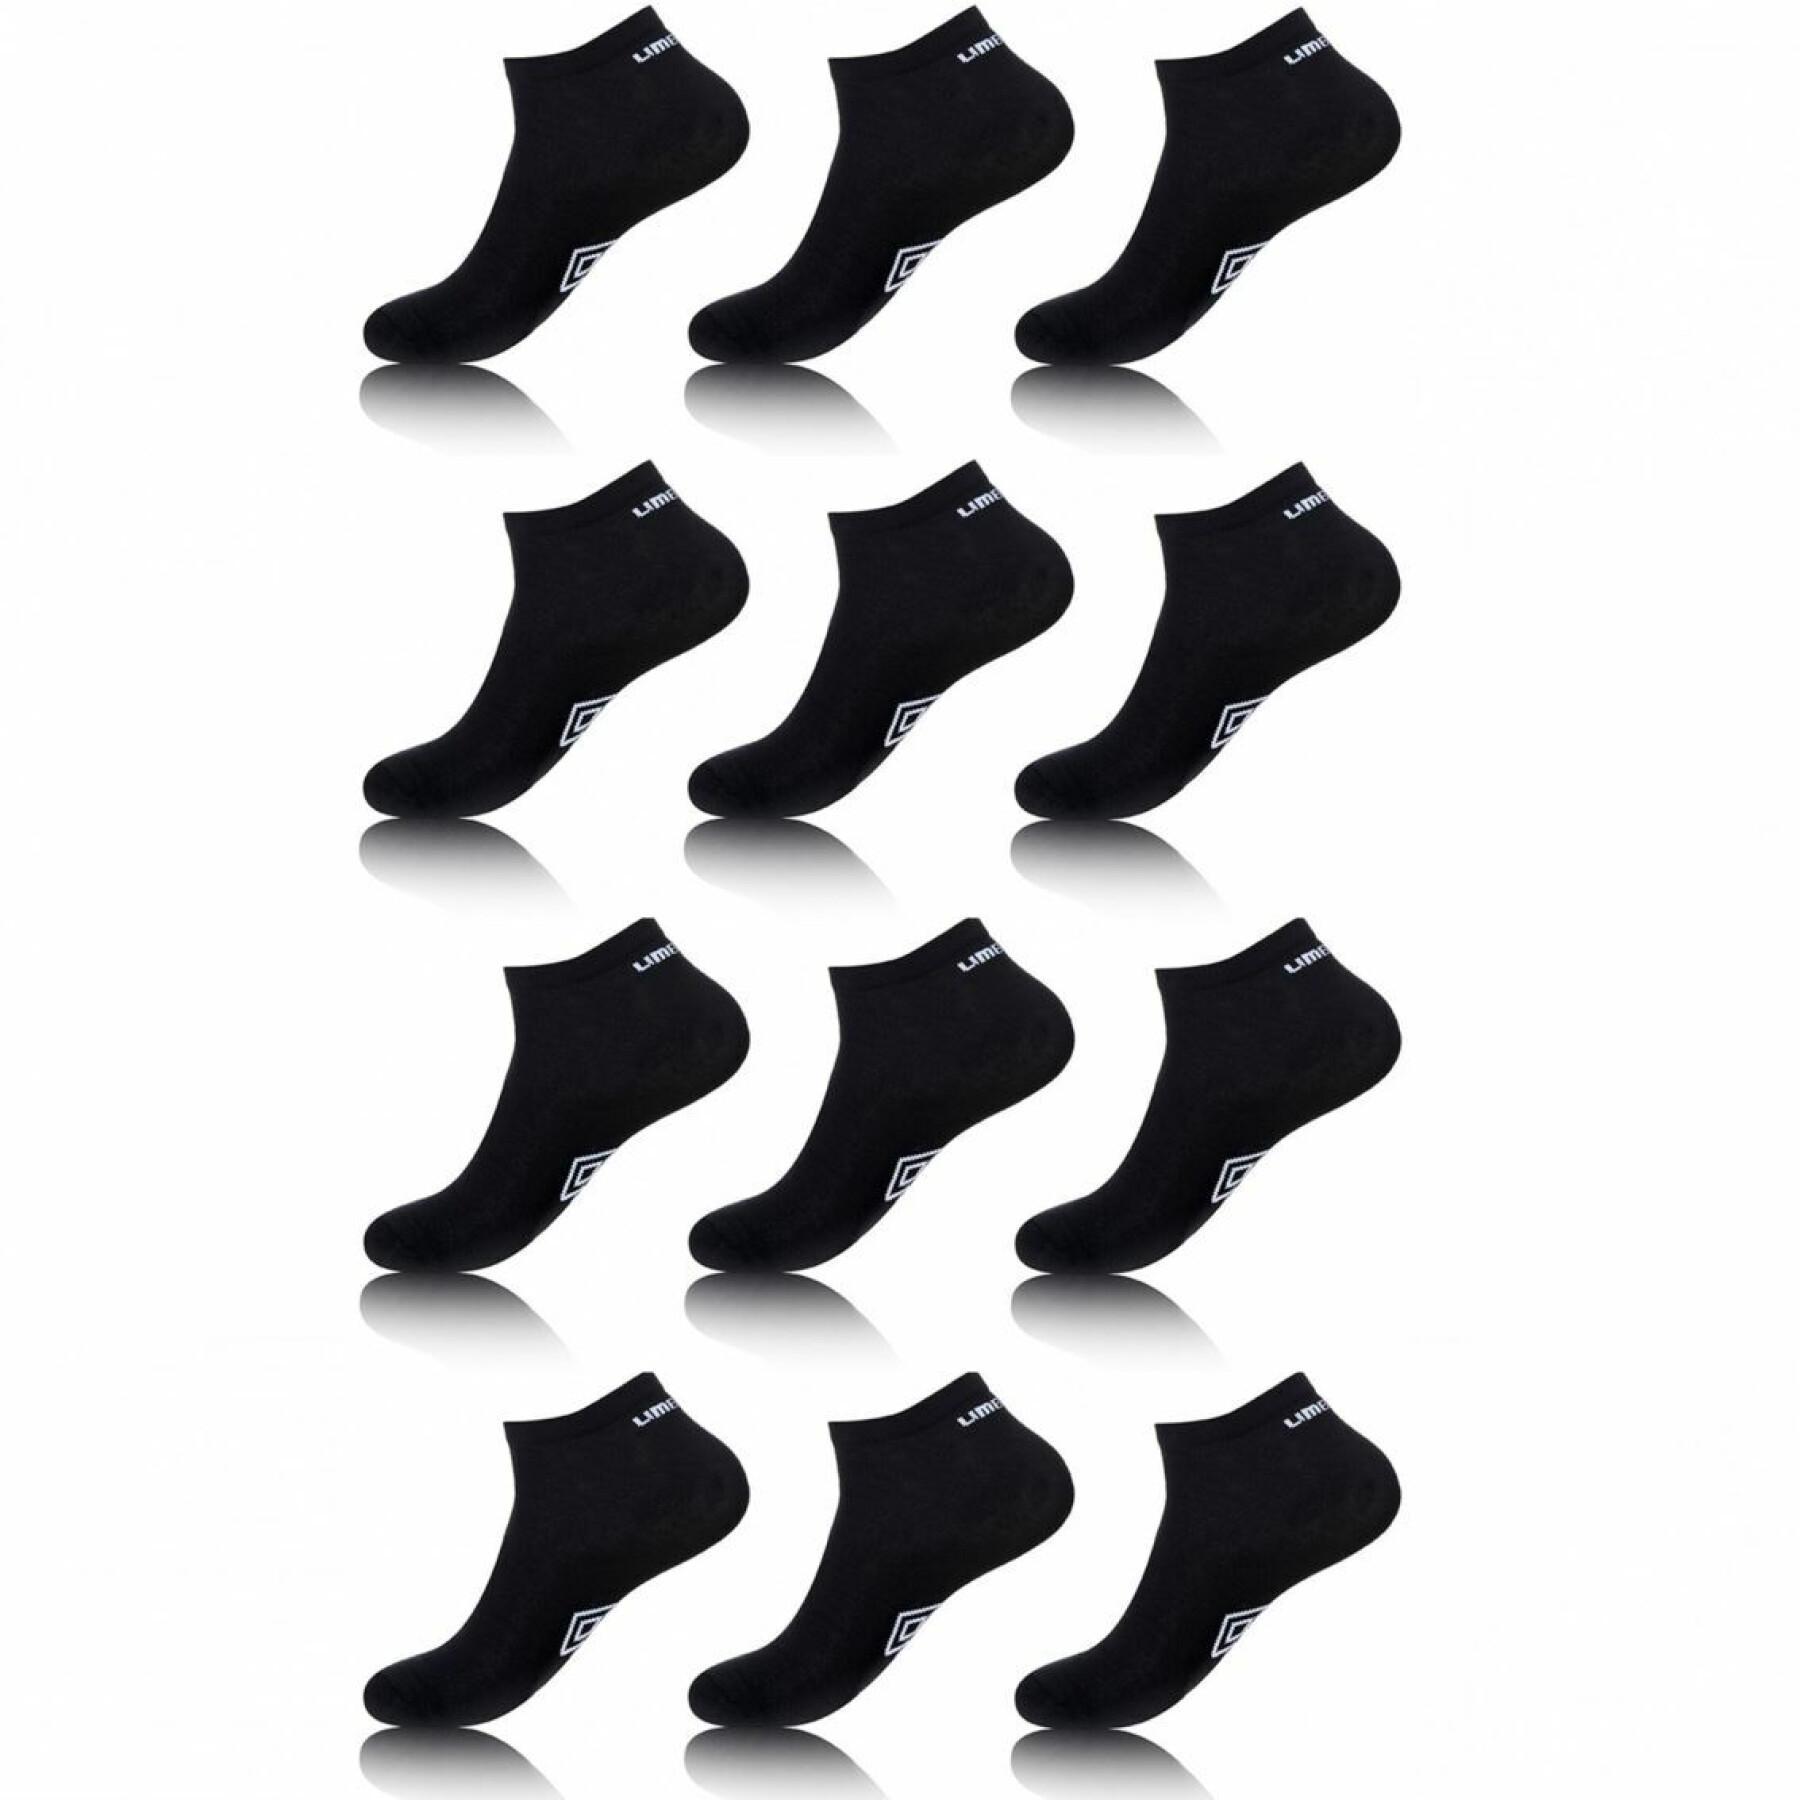 Lot of 12 pairs of socks Umbro